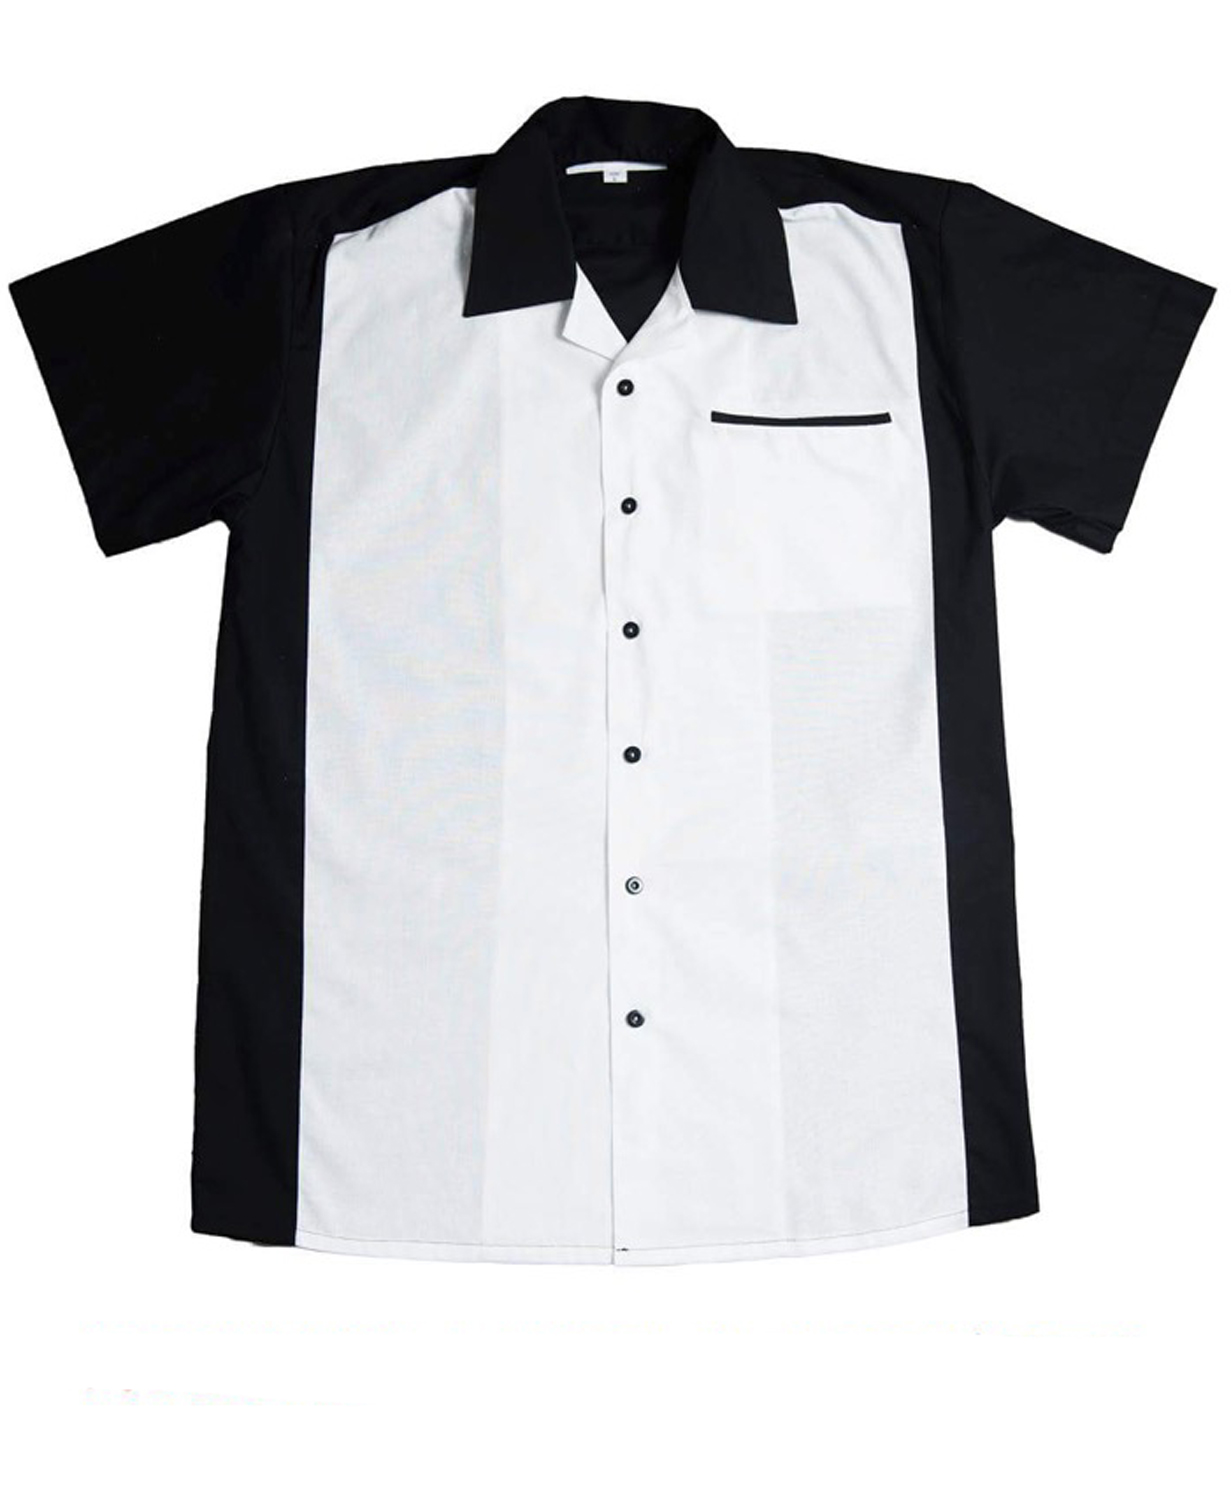 50er Jahre Panel rockabilly Lounge Shirt BOWLING Hemd schwarz weiß